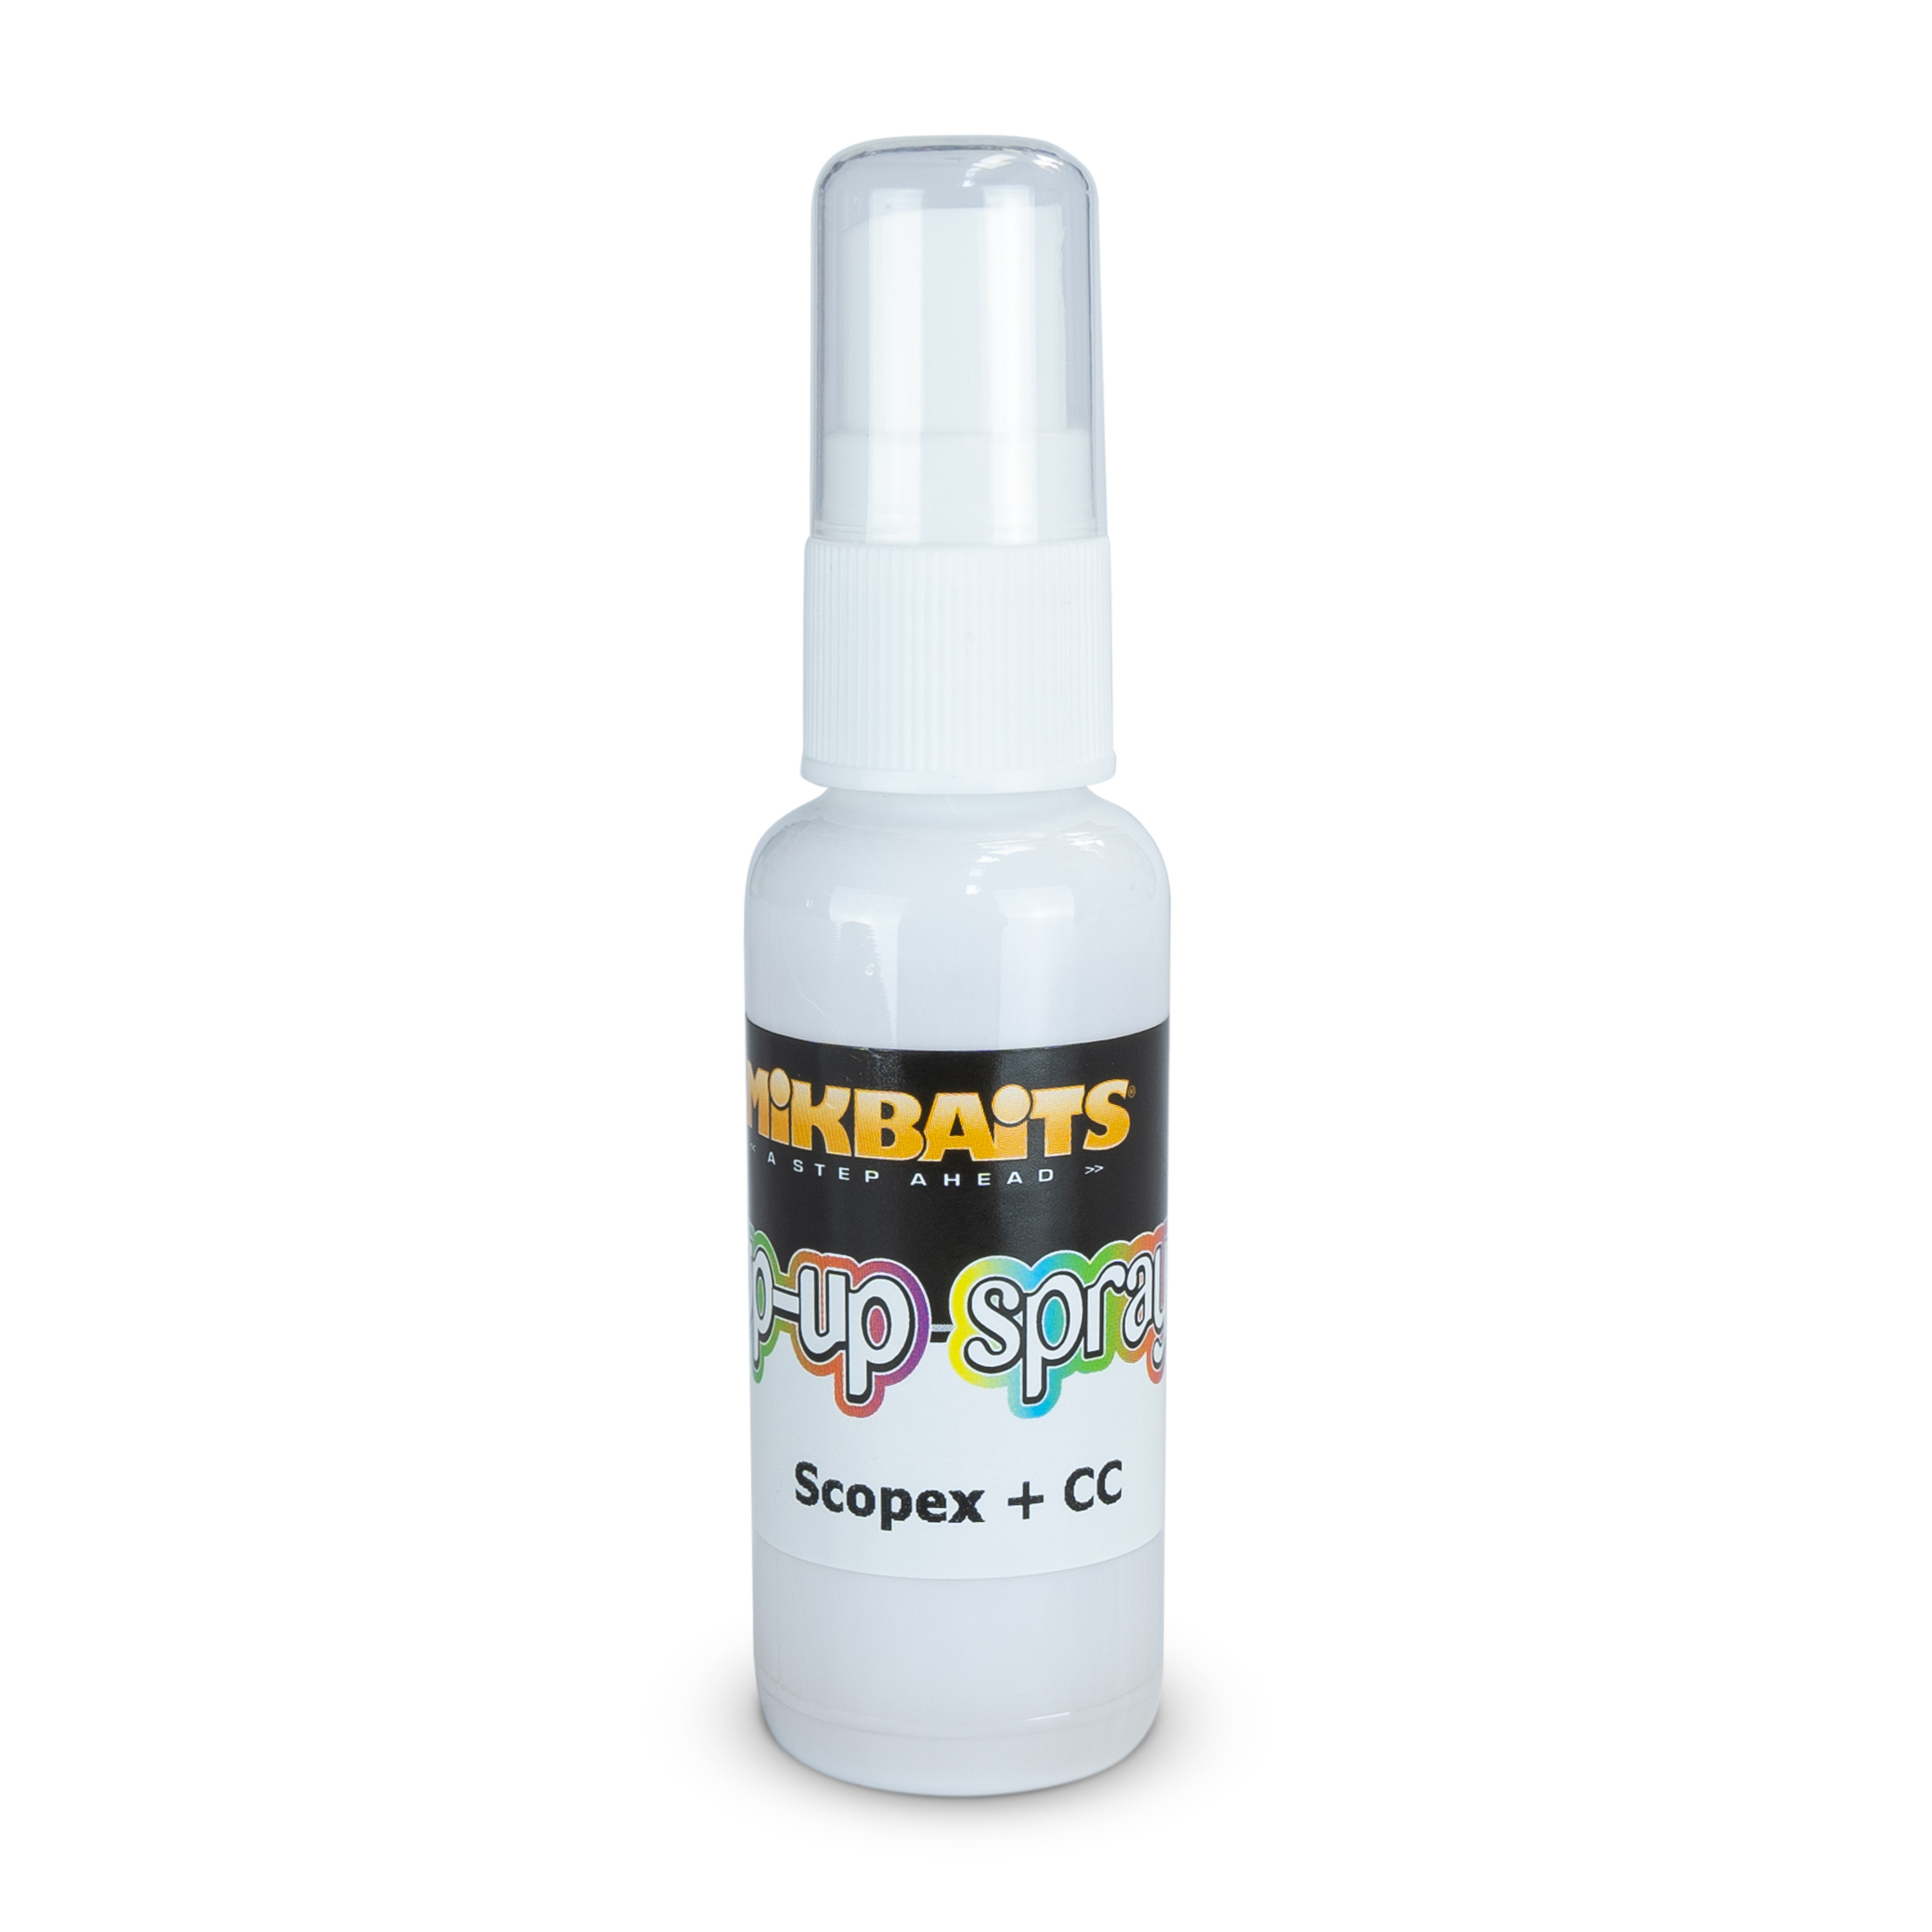 Mikbaits pop-up spray 30ml Příchuť: Scopex + CC